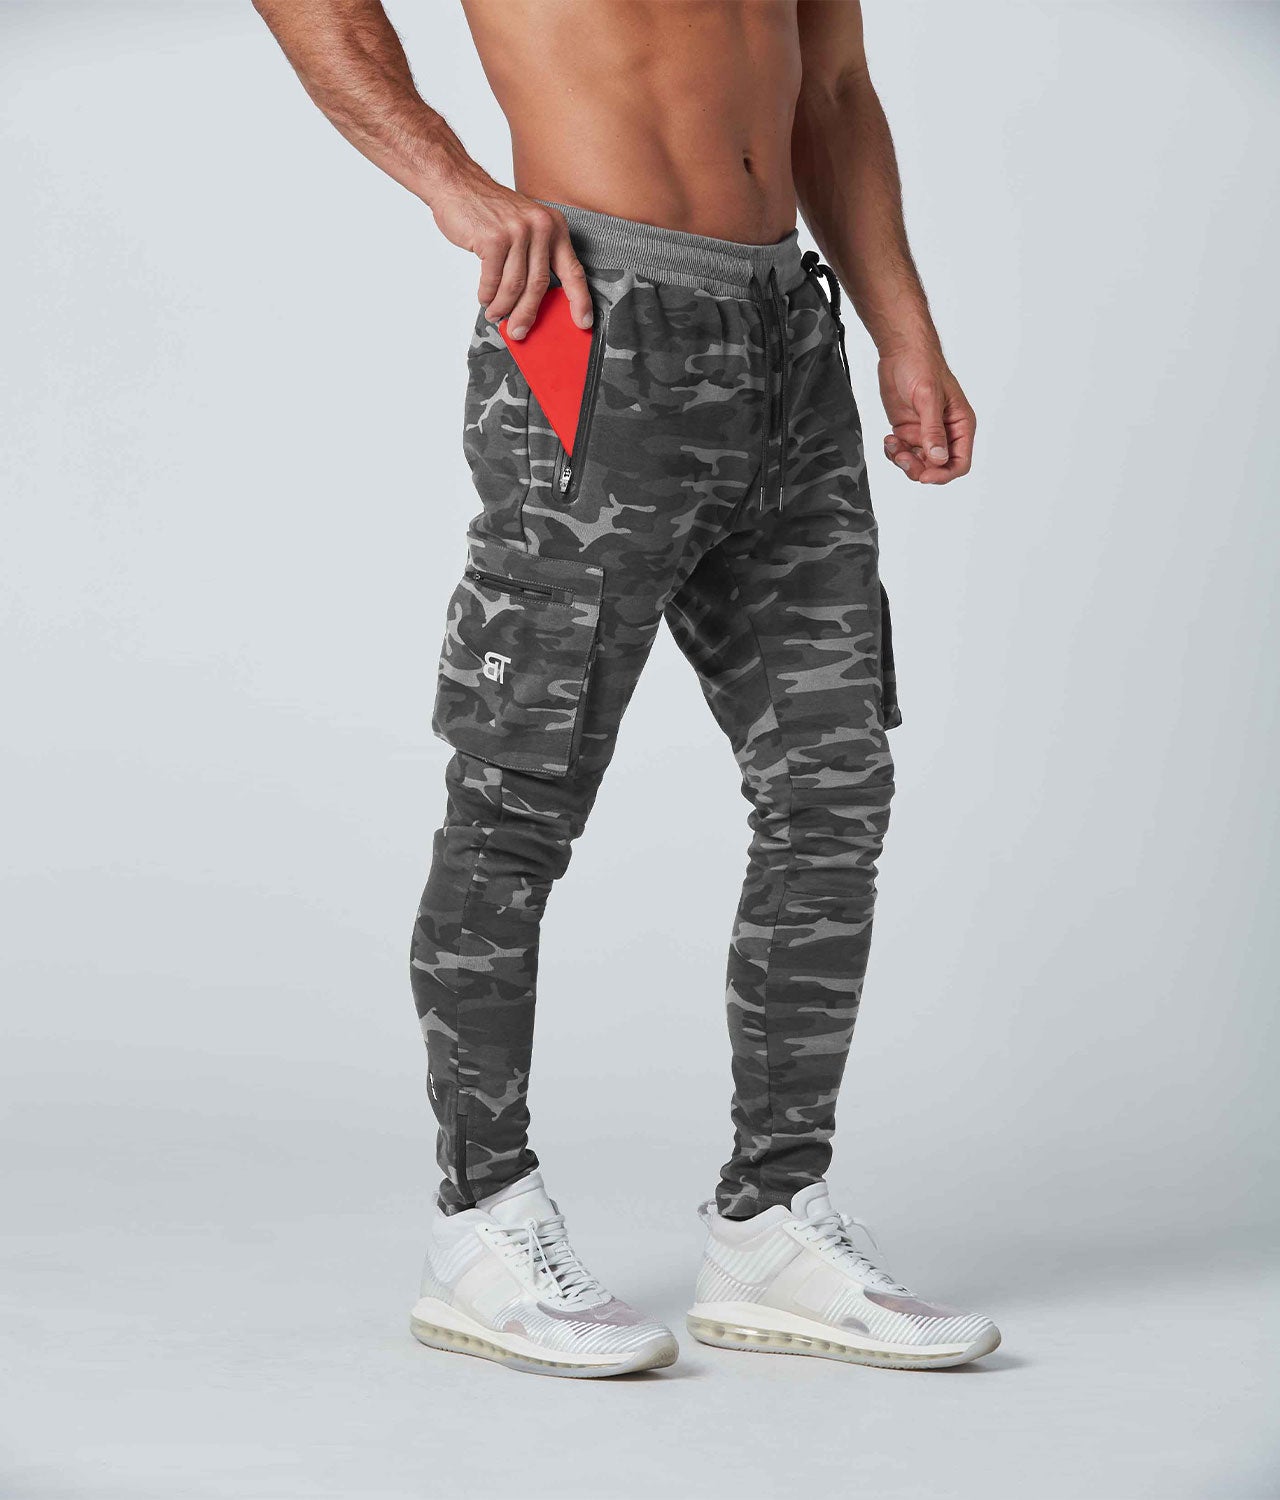 Miluxas Men's Slim-Fit Stretch Cargo Pant Clearance Black 6(L) - Walmart.com